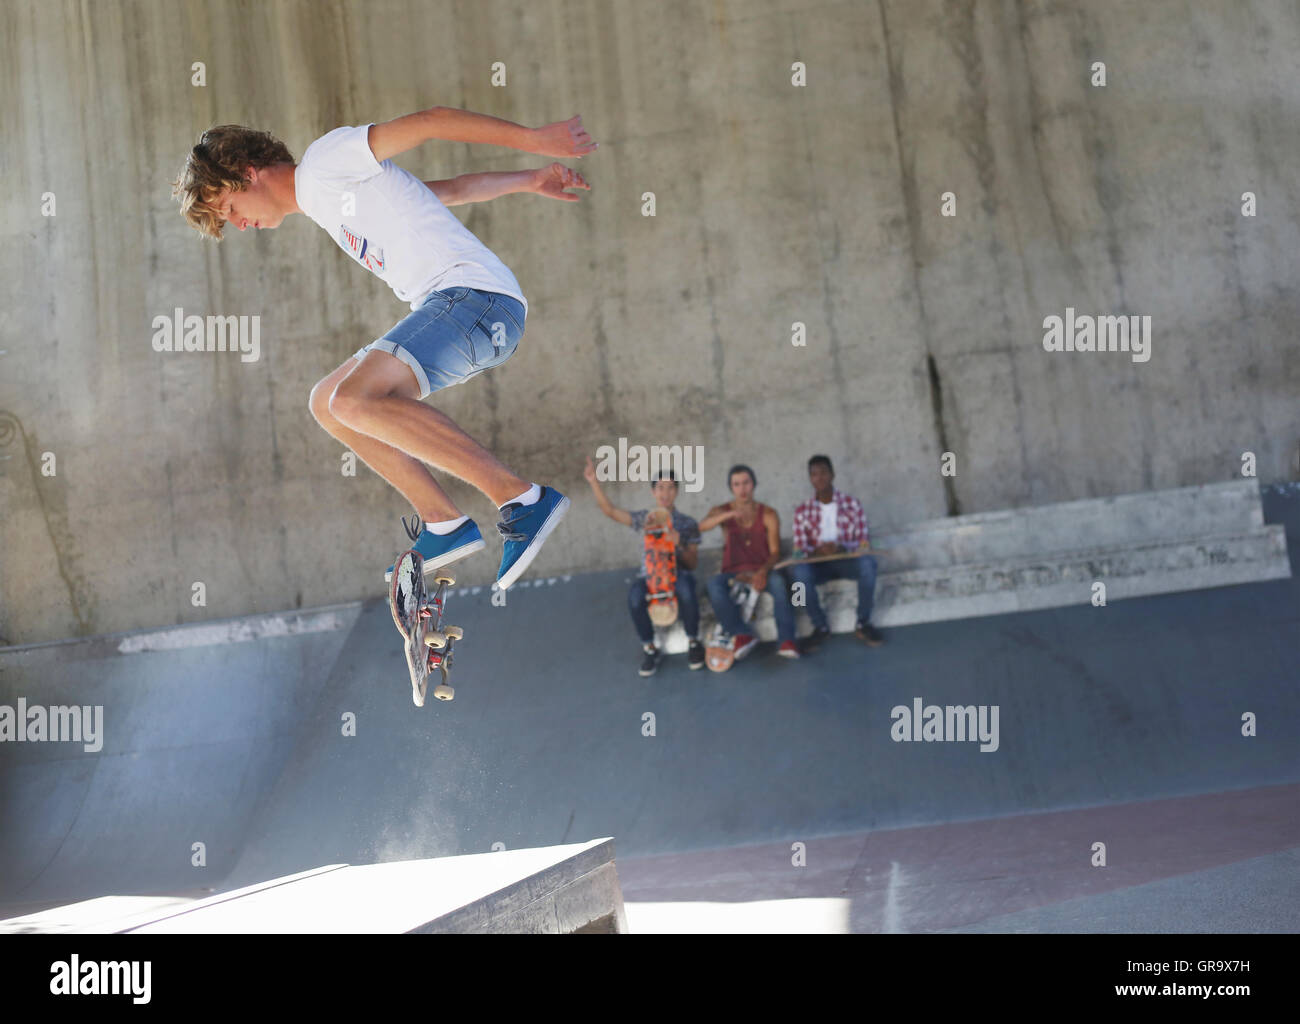 Teenage boy flipping skateboard at skate park Stock Photo